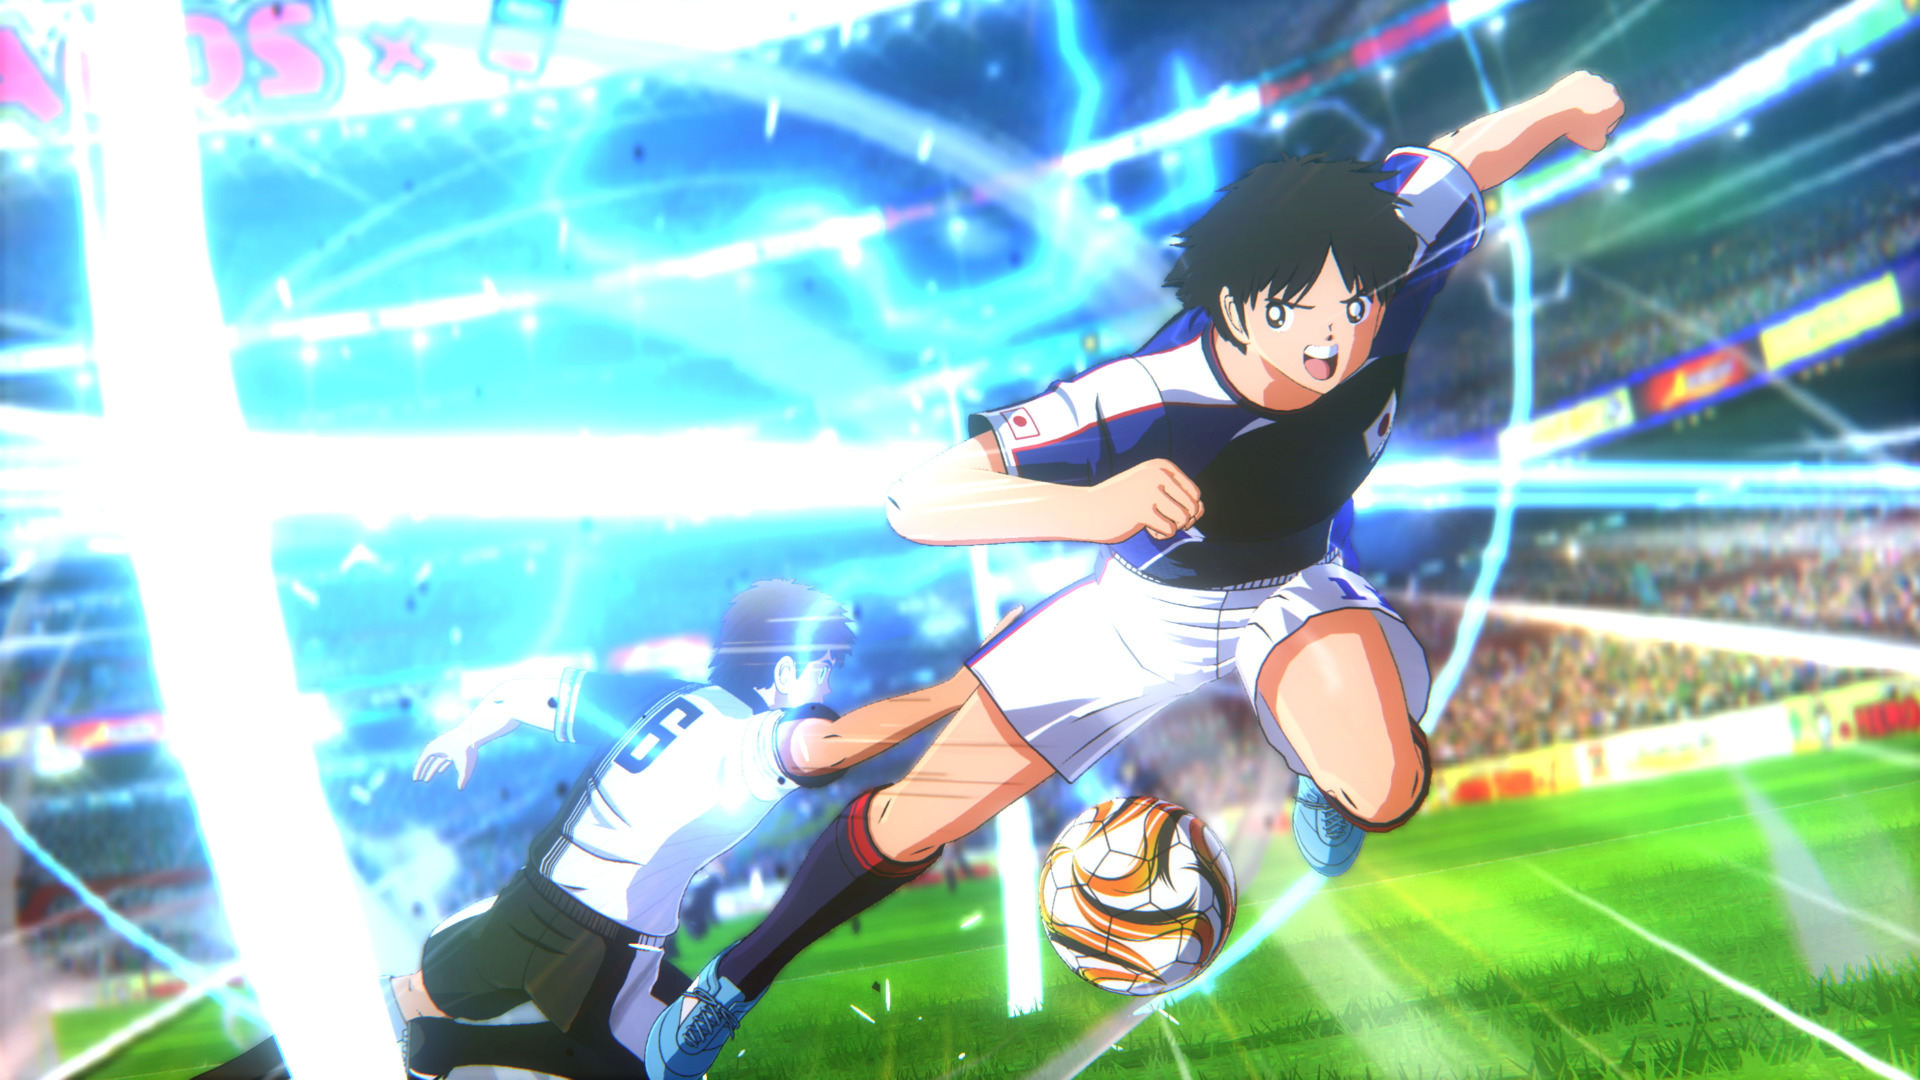 994375 descargar imagen captain tsubasa: rise of new champions, videojuego: fondos de pantalla y protectores de pantalla gratis